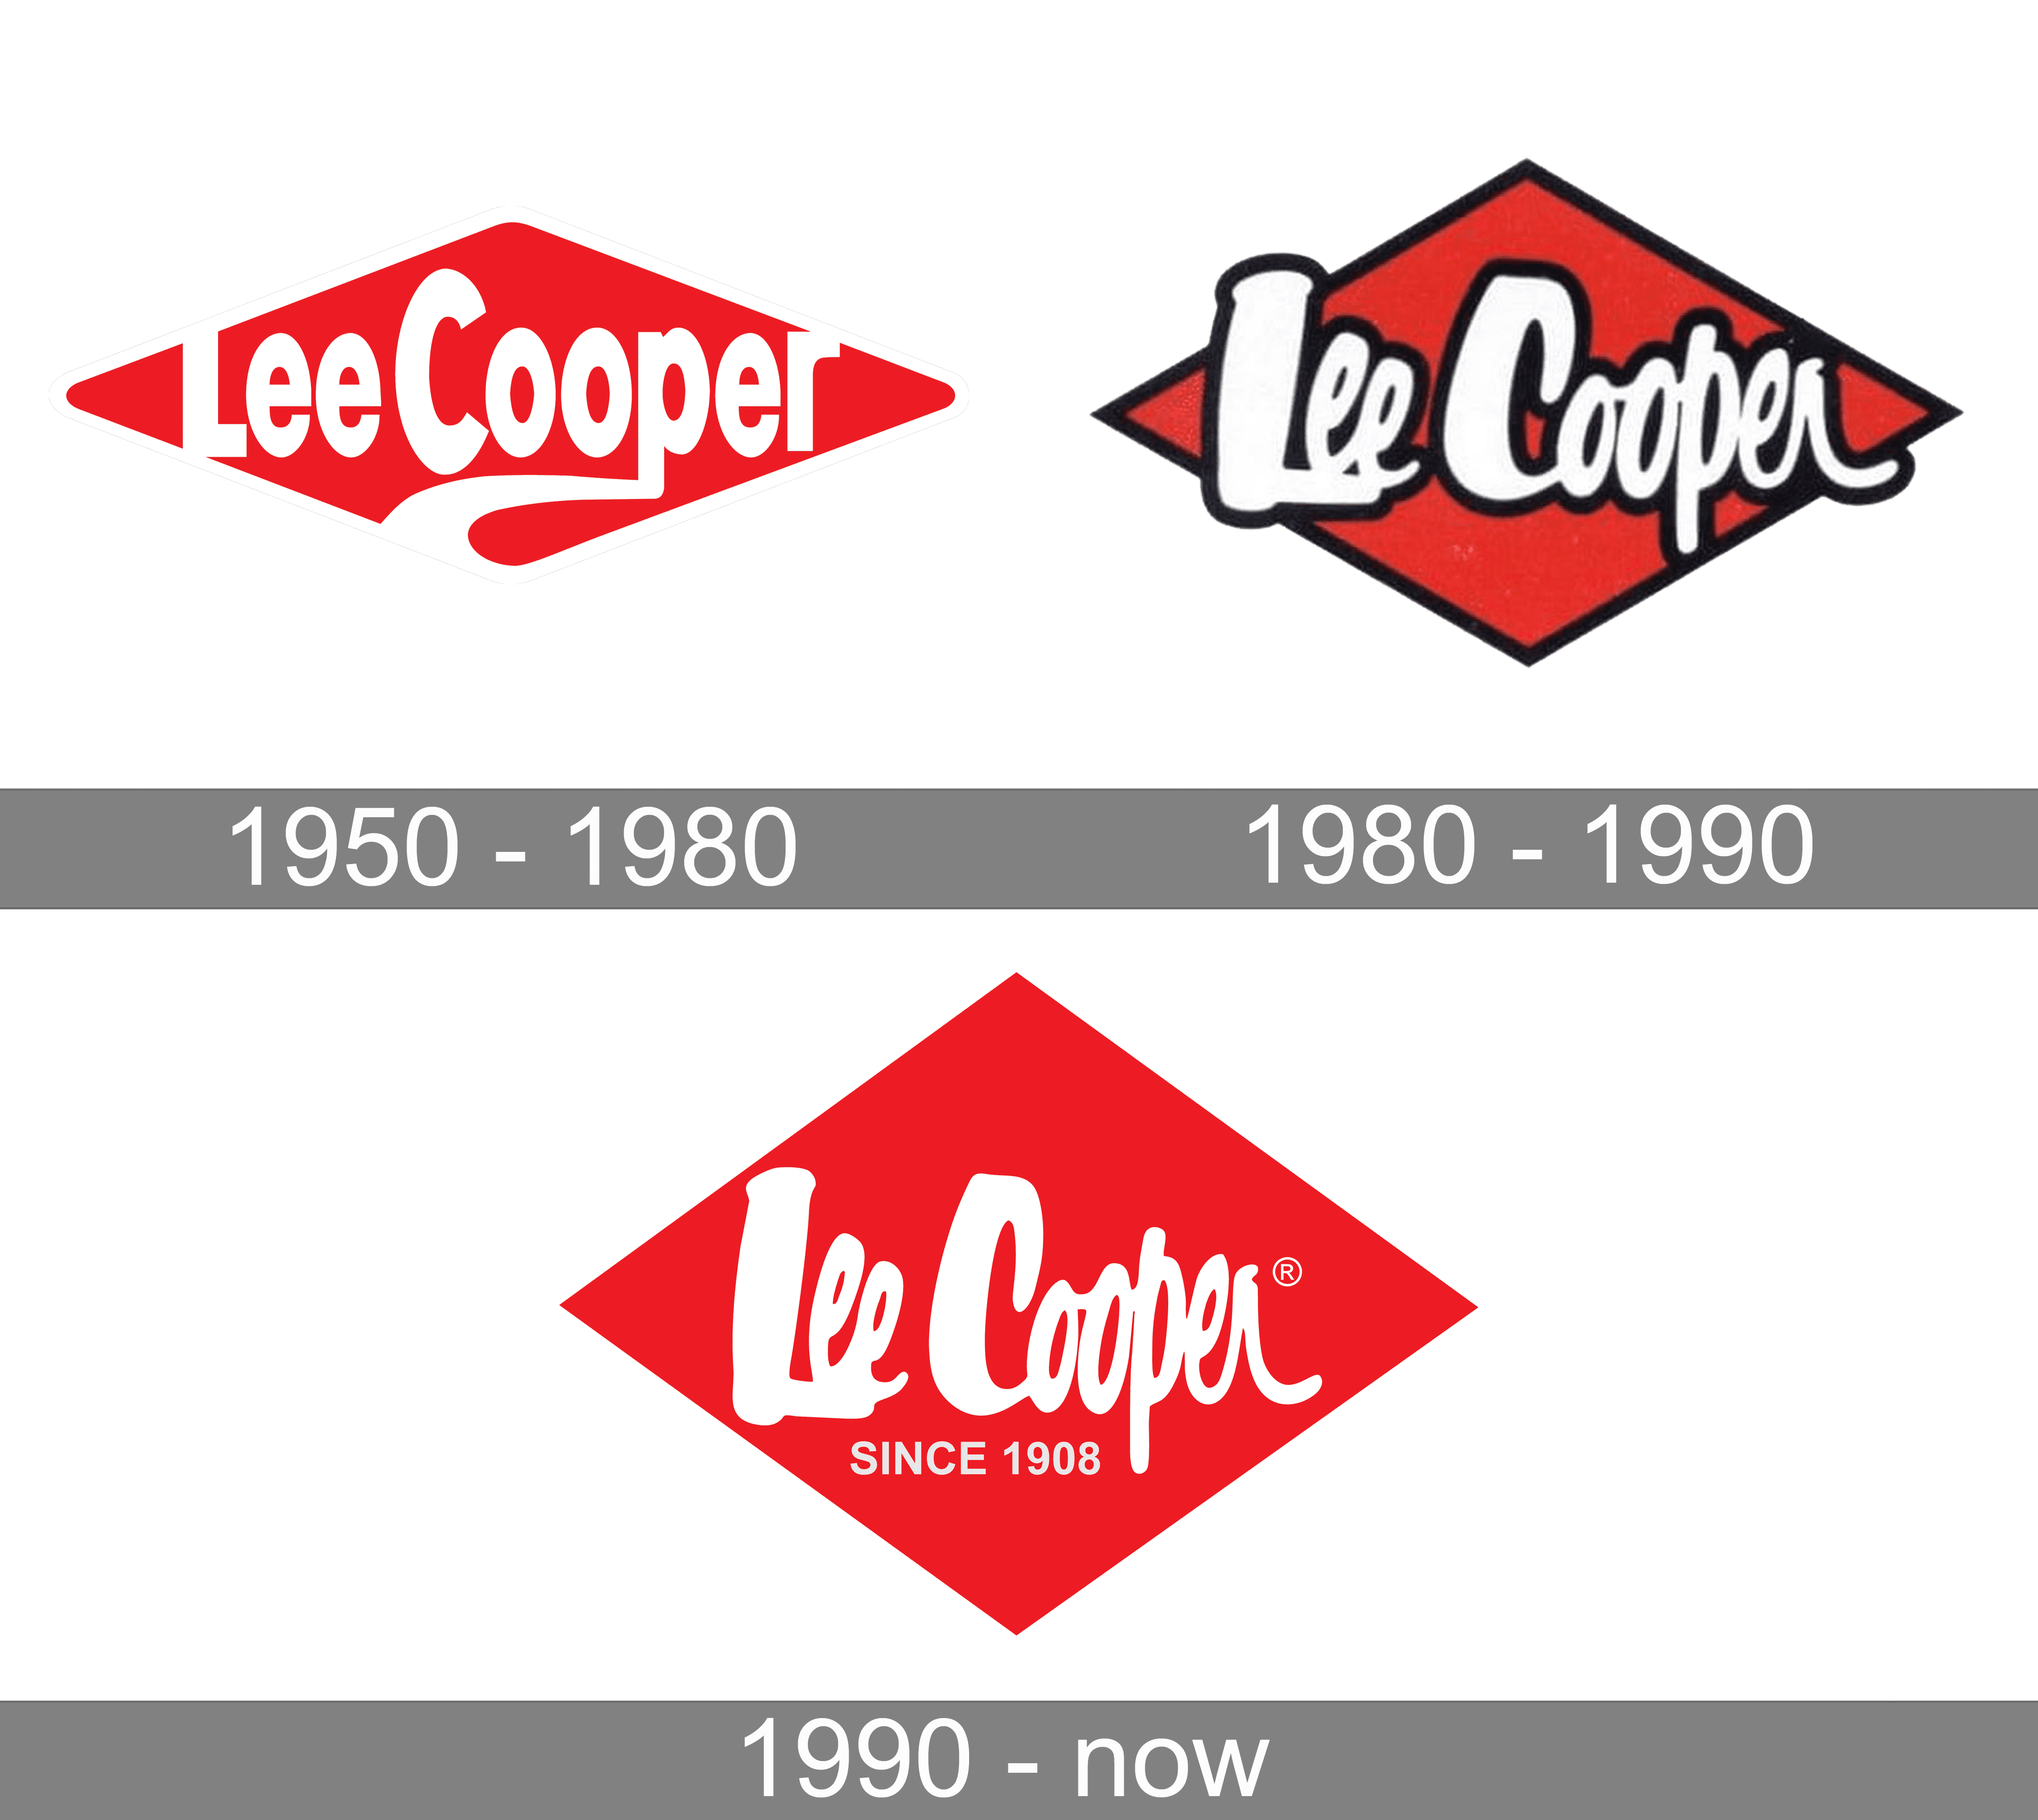 cooper font logo